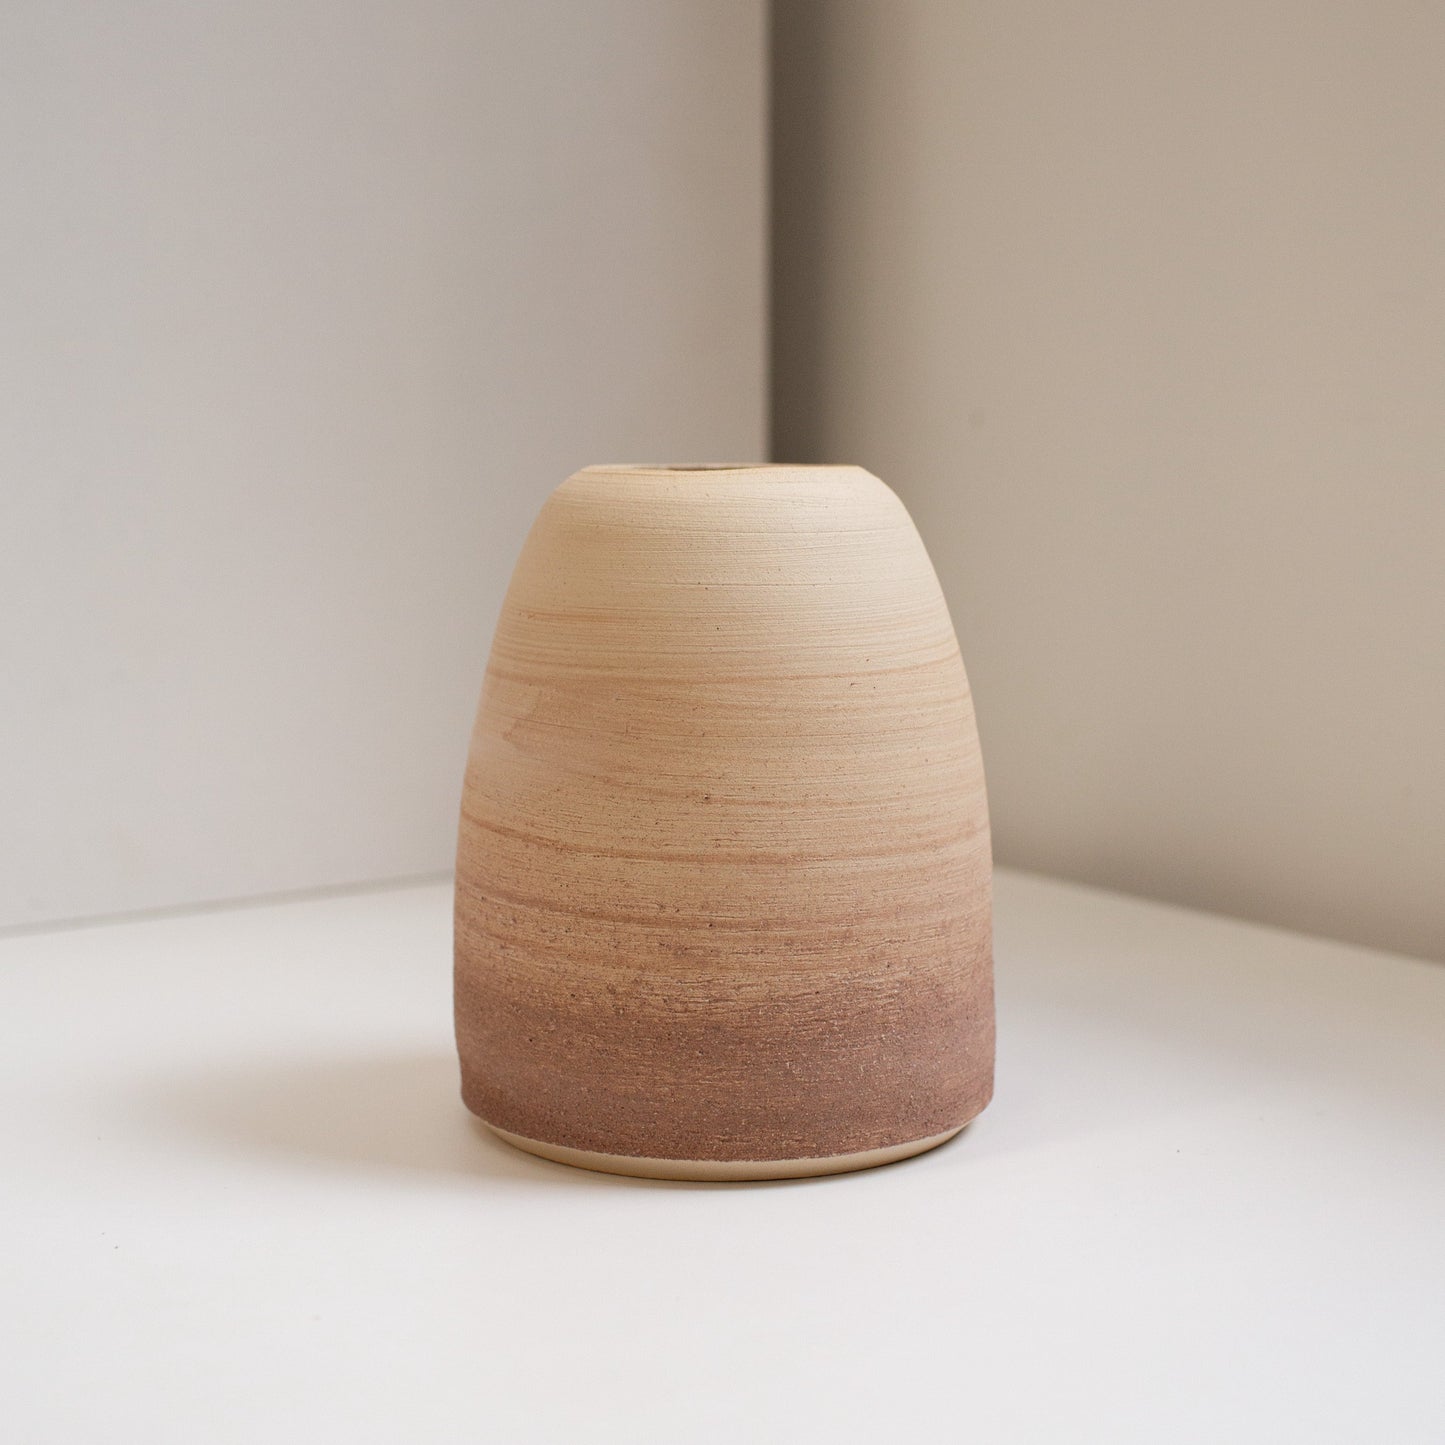 Muriwai Wild Clay Vase #7